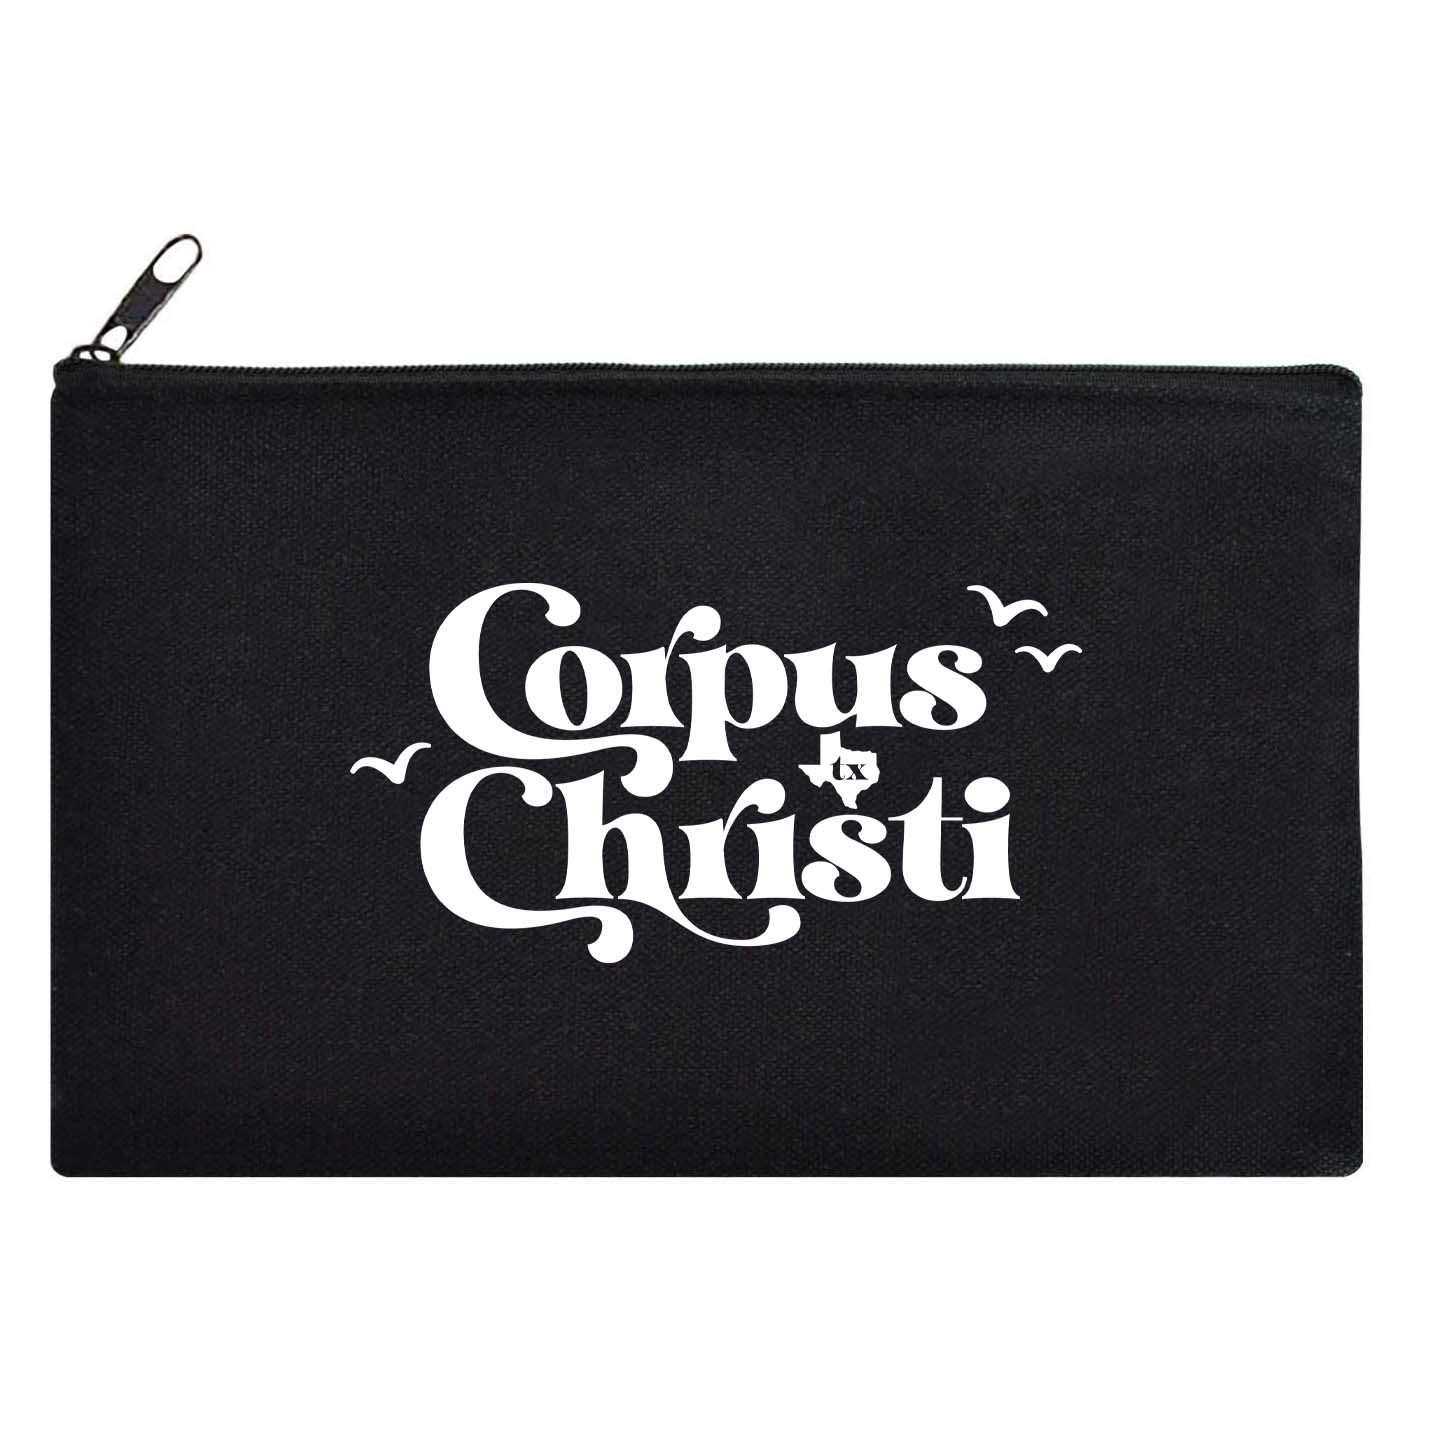 Corpus Christi Zipper Pouch